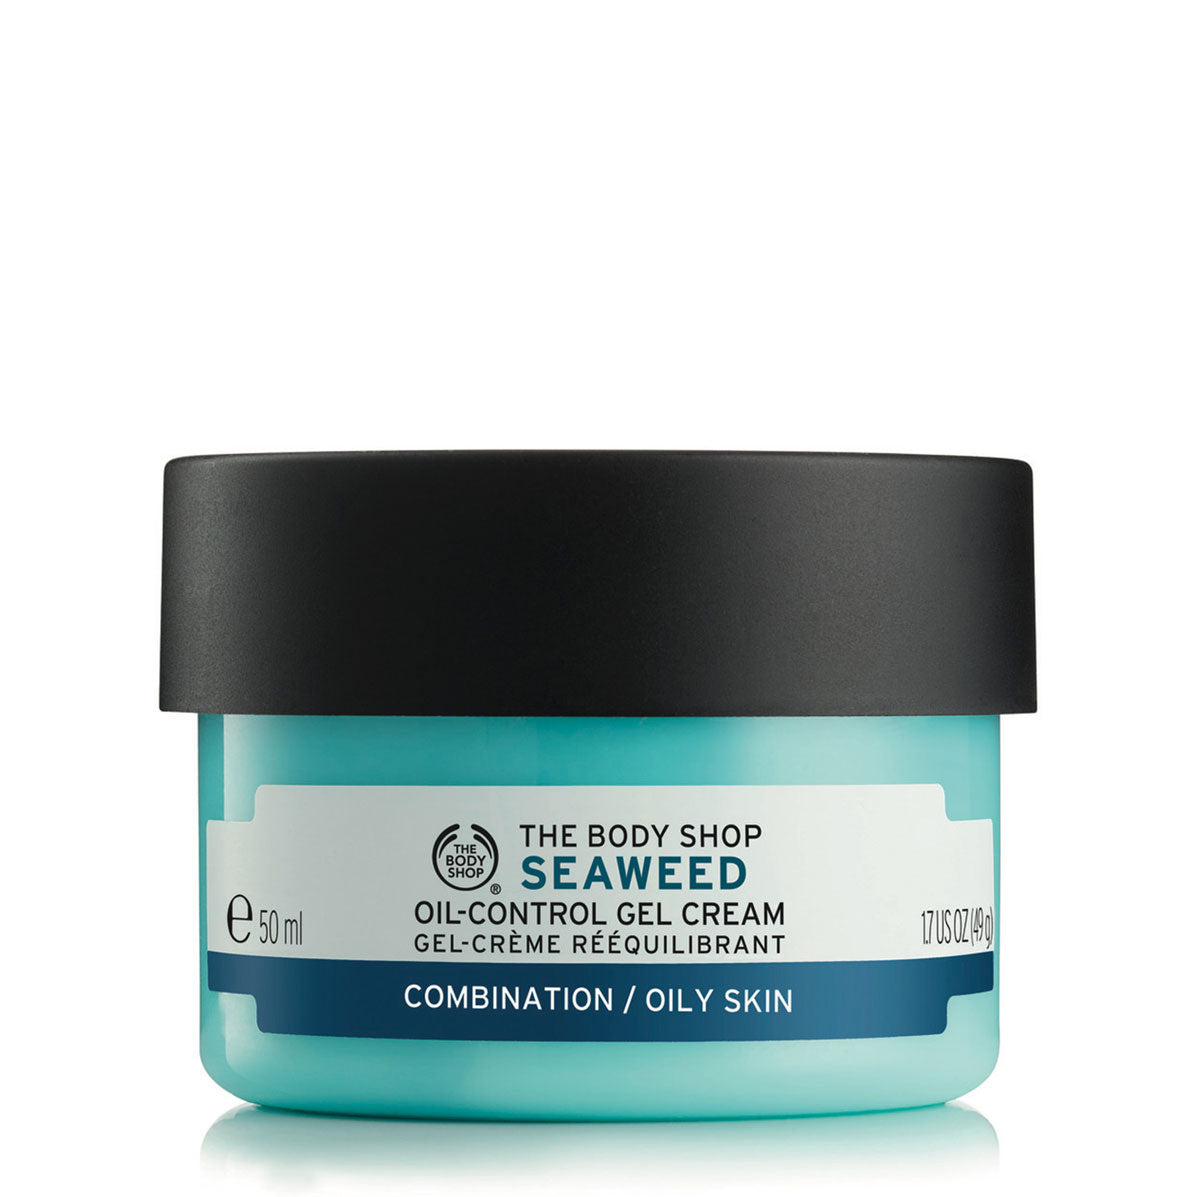 The Body Shop Seaweed Gel Cream